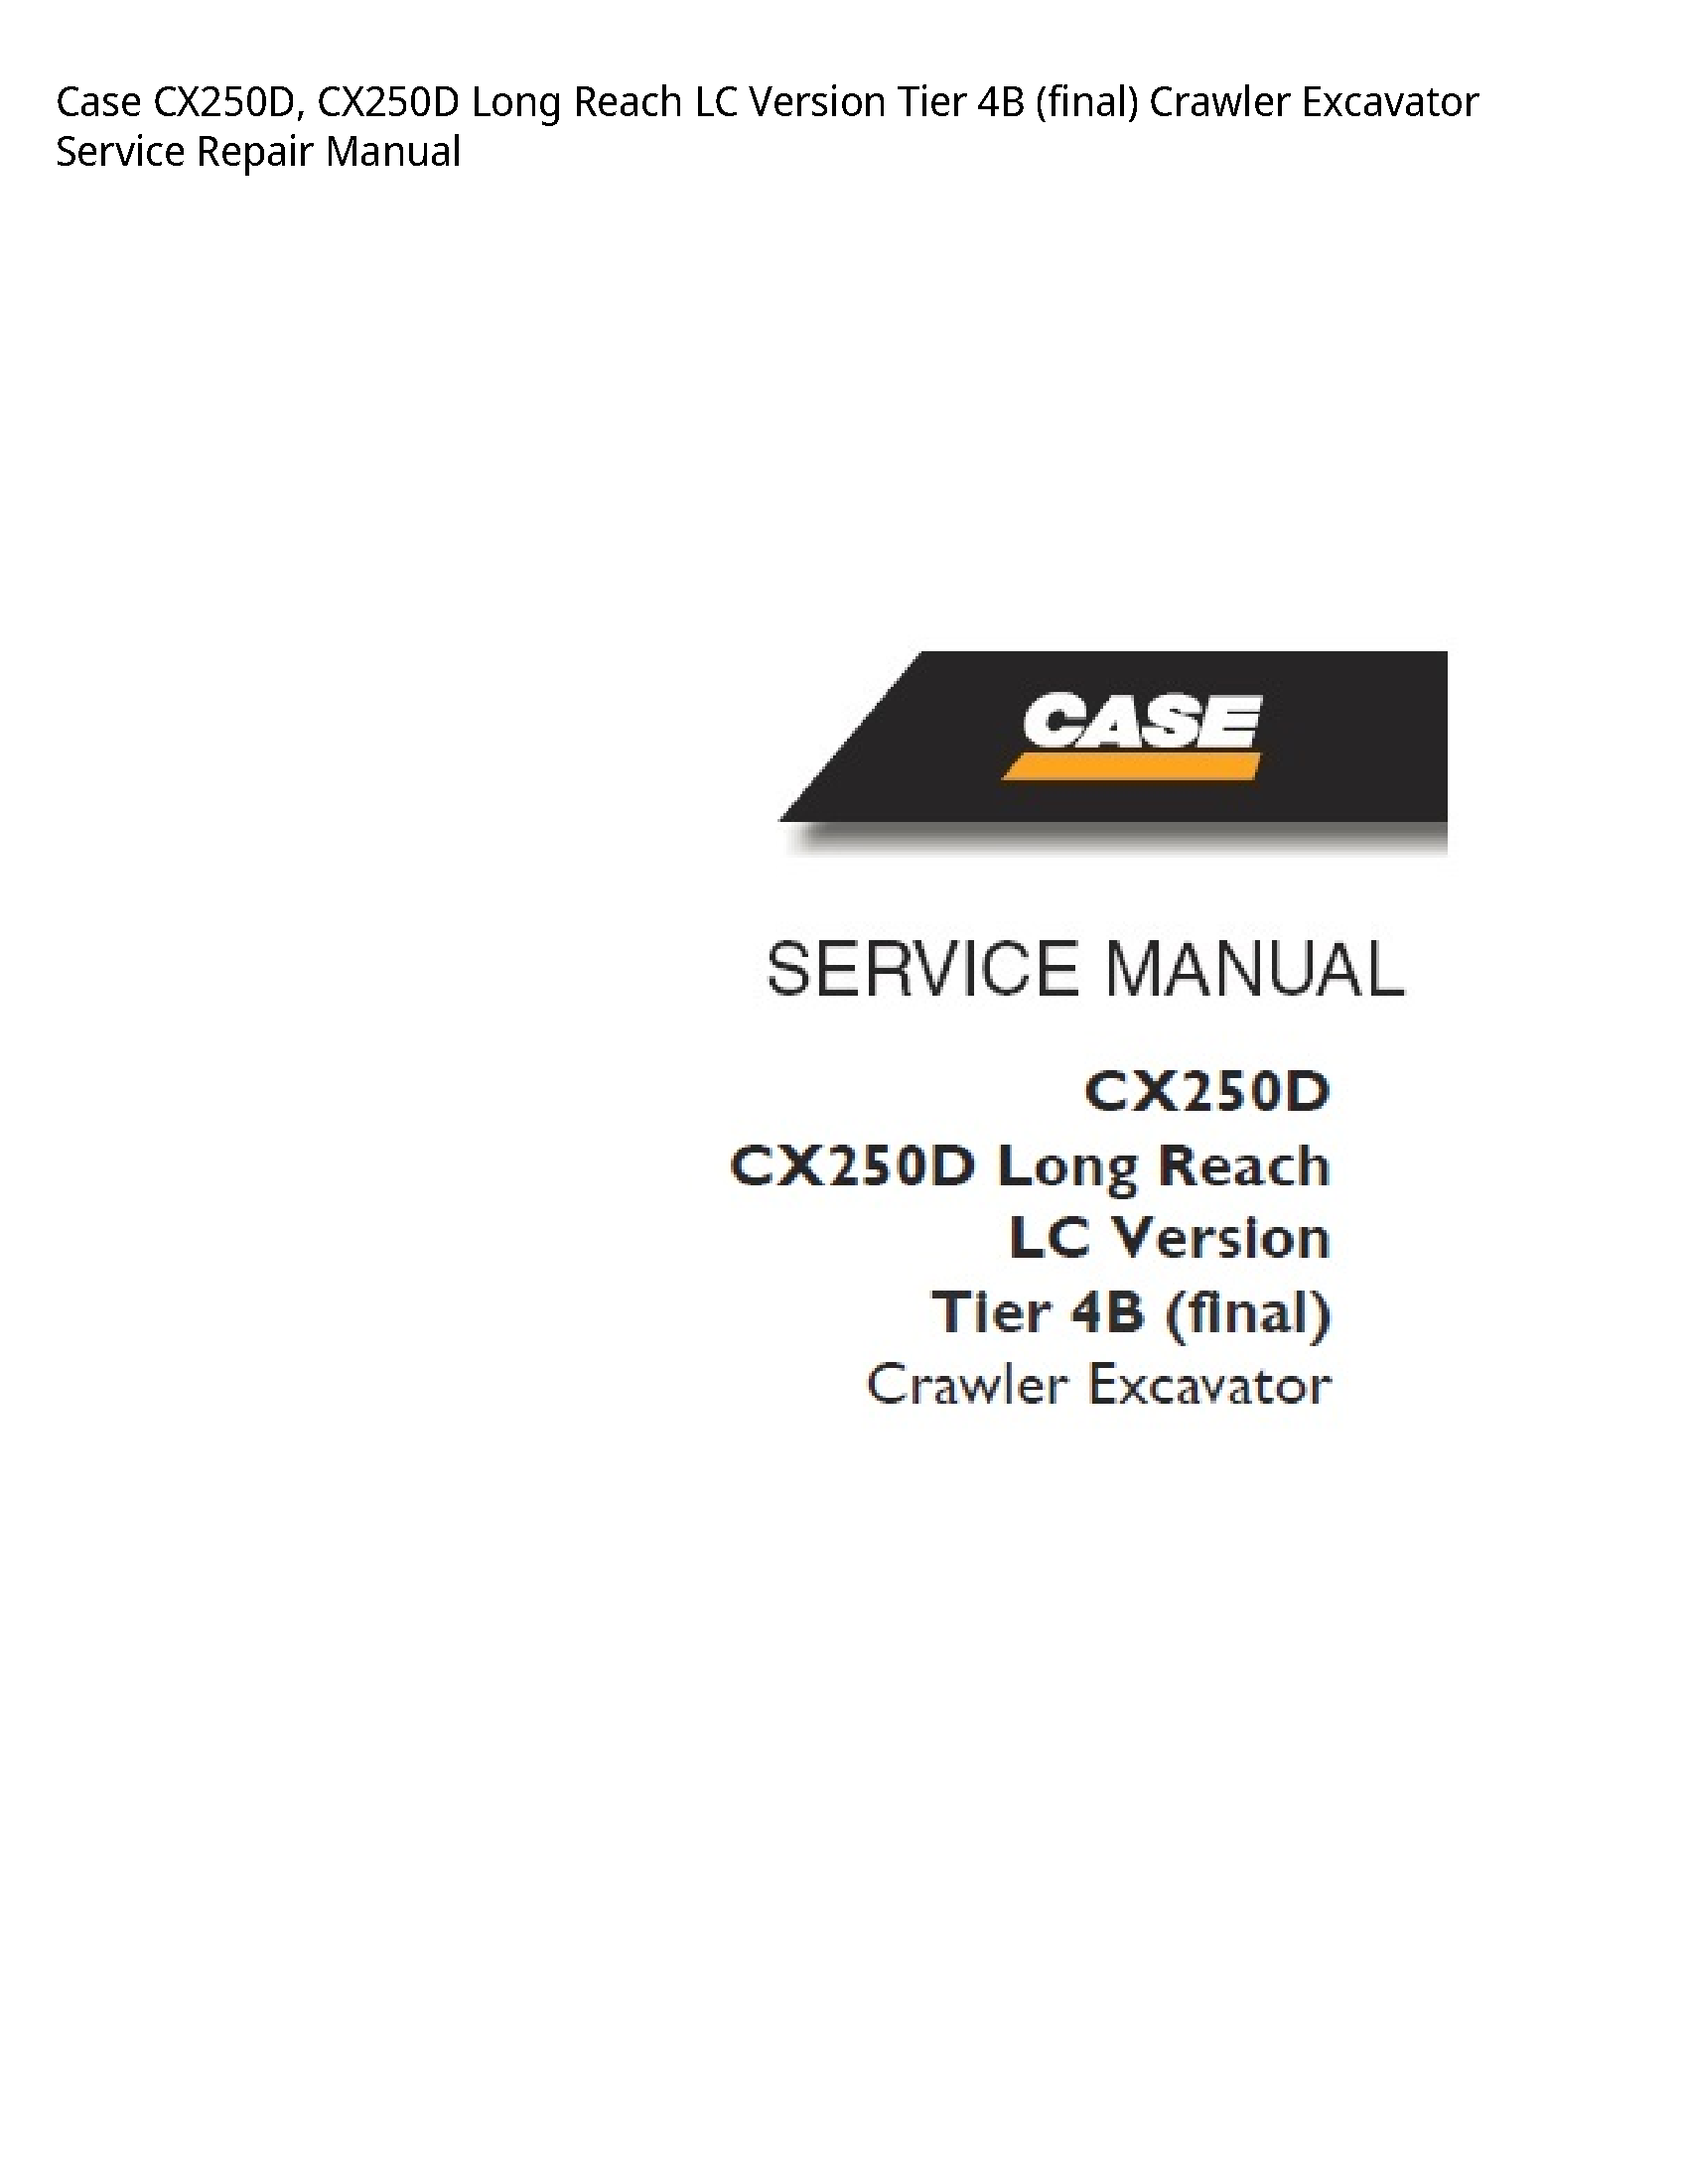 Case/Case IH CX250D Long Reach LC Version Tier (final) Crawler Excavator manual